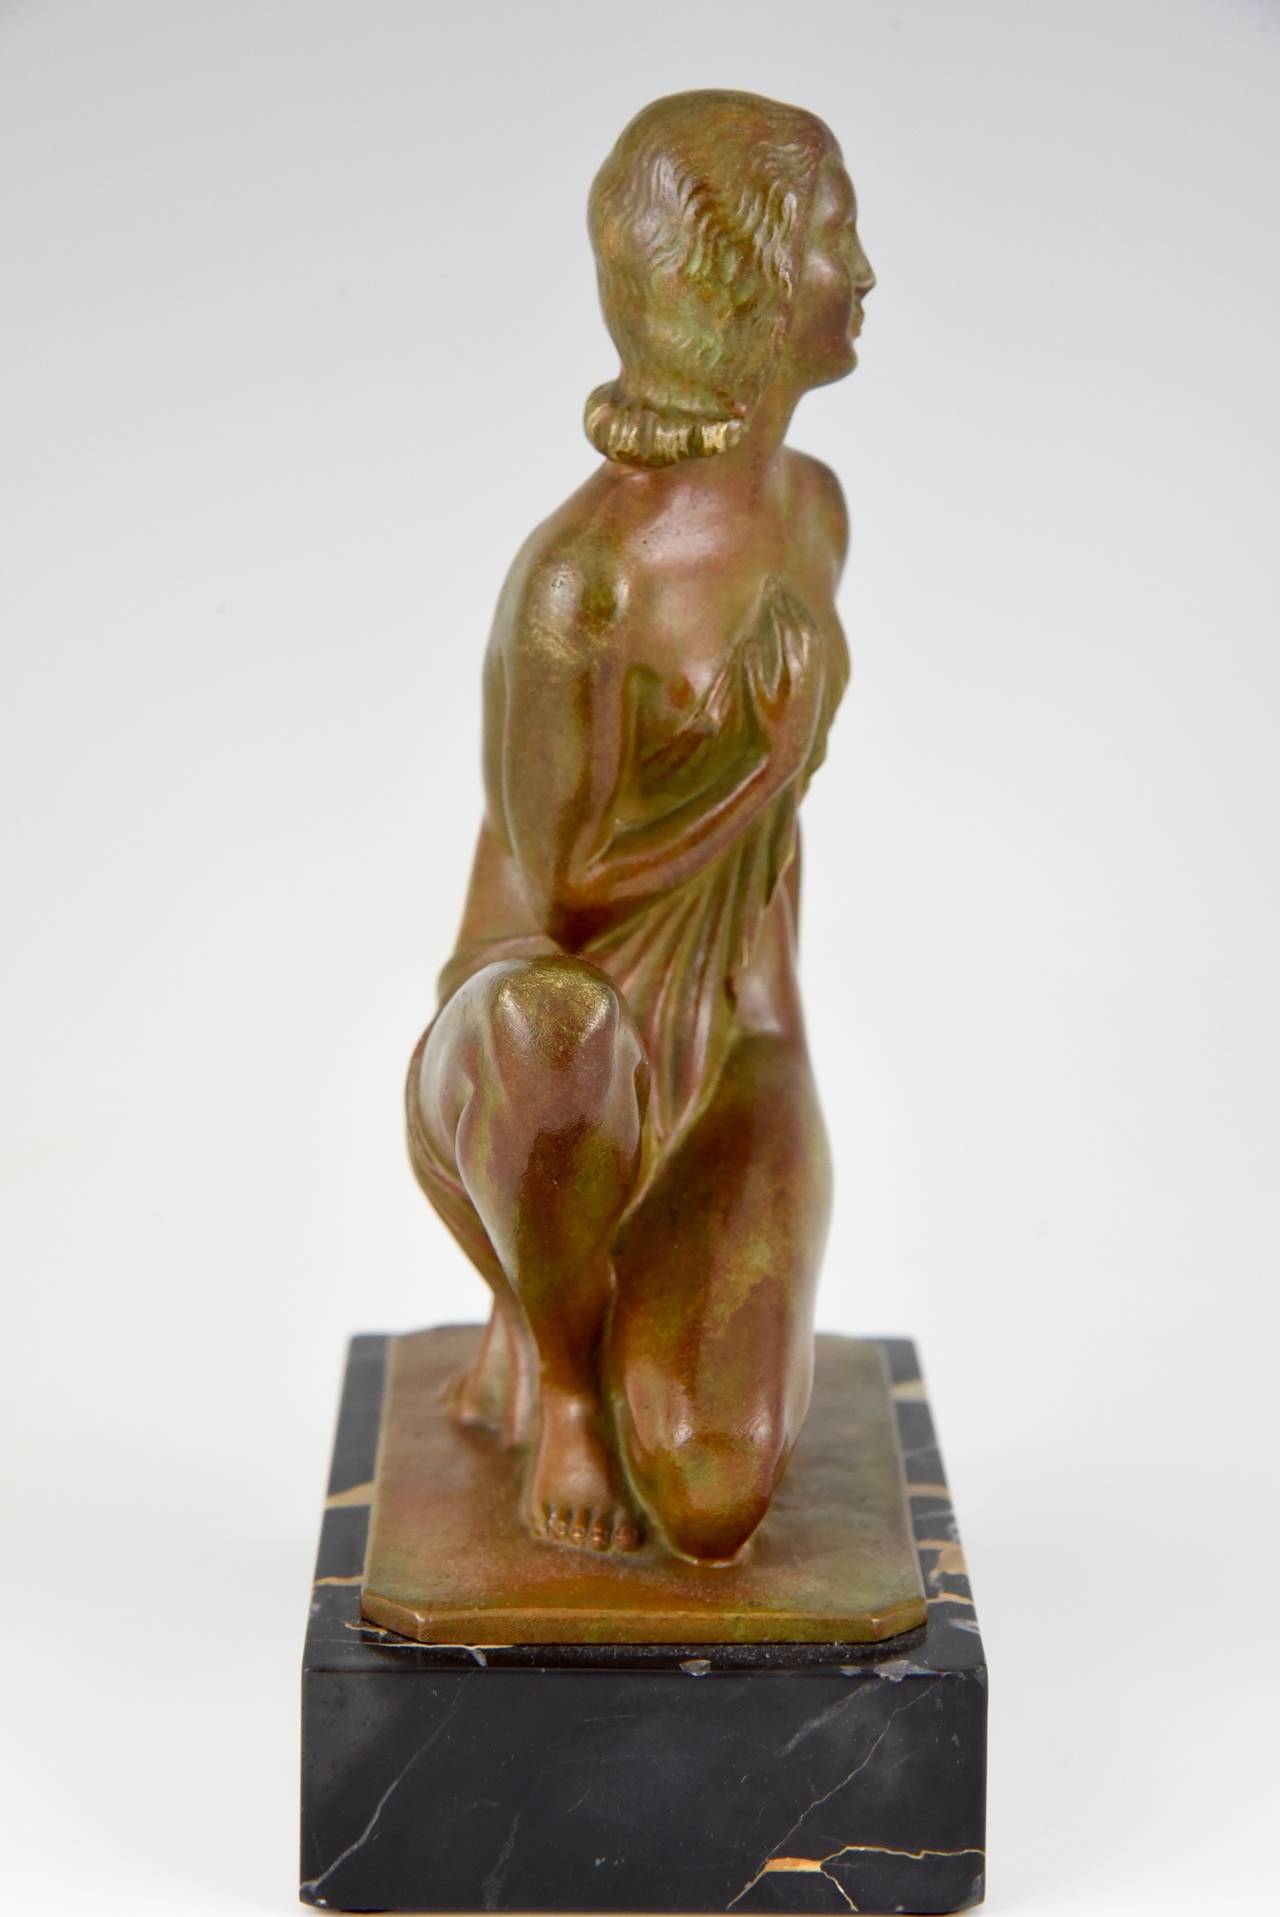 Hungarian Art Deco Bronze Sculpture of a Nude by Kovats, 1925 Original